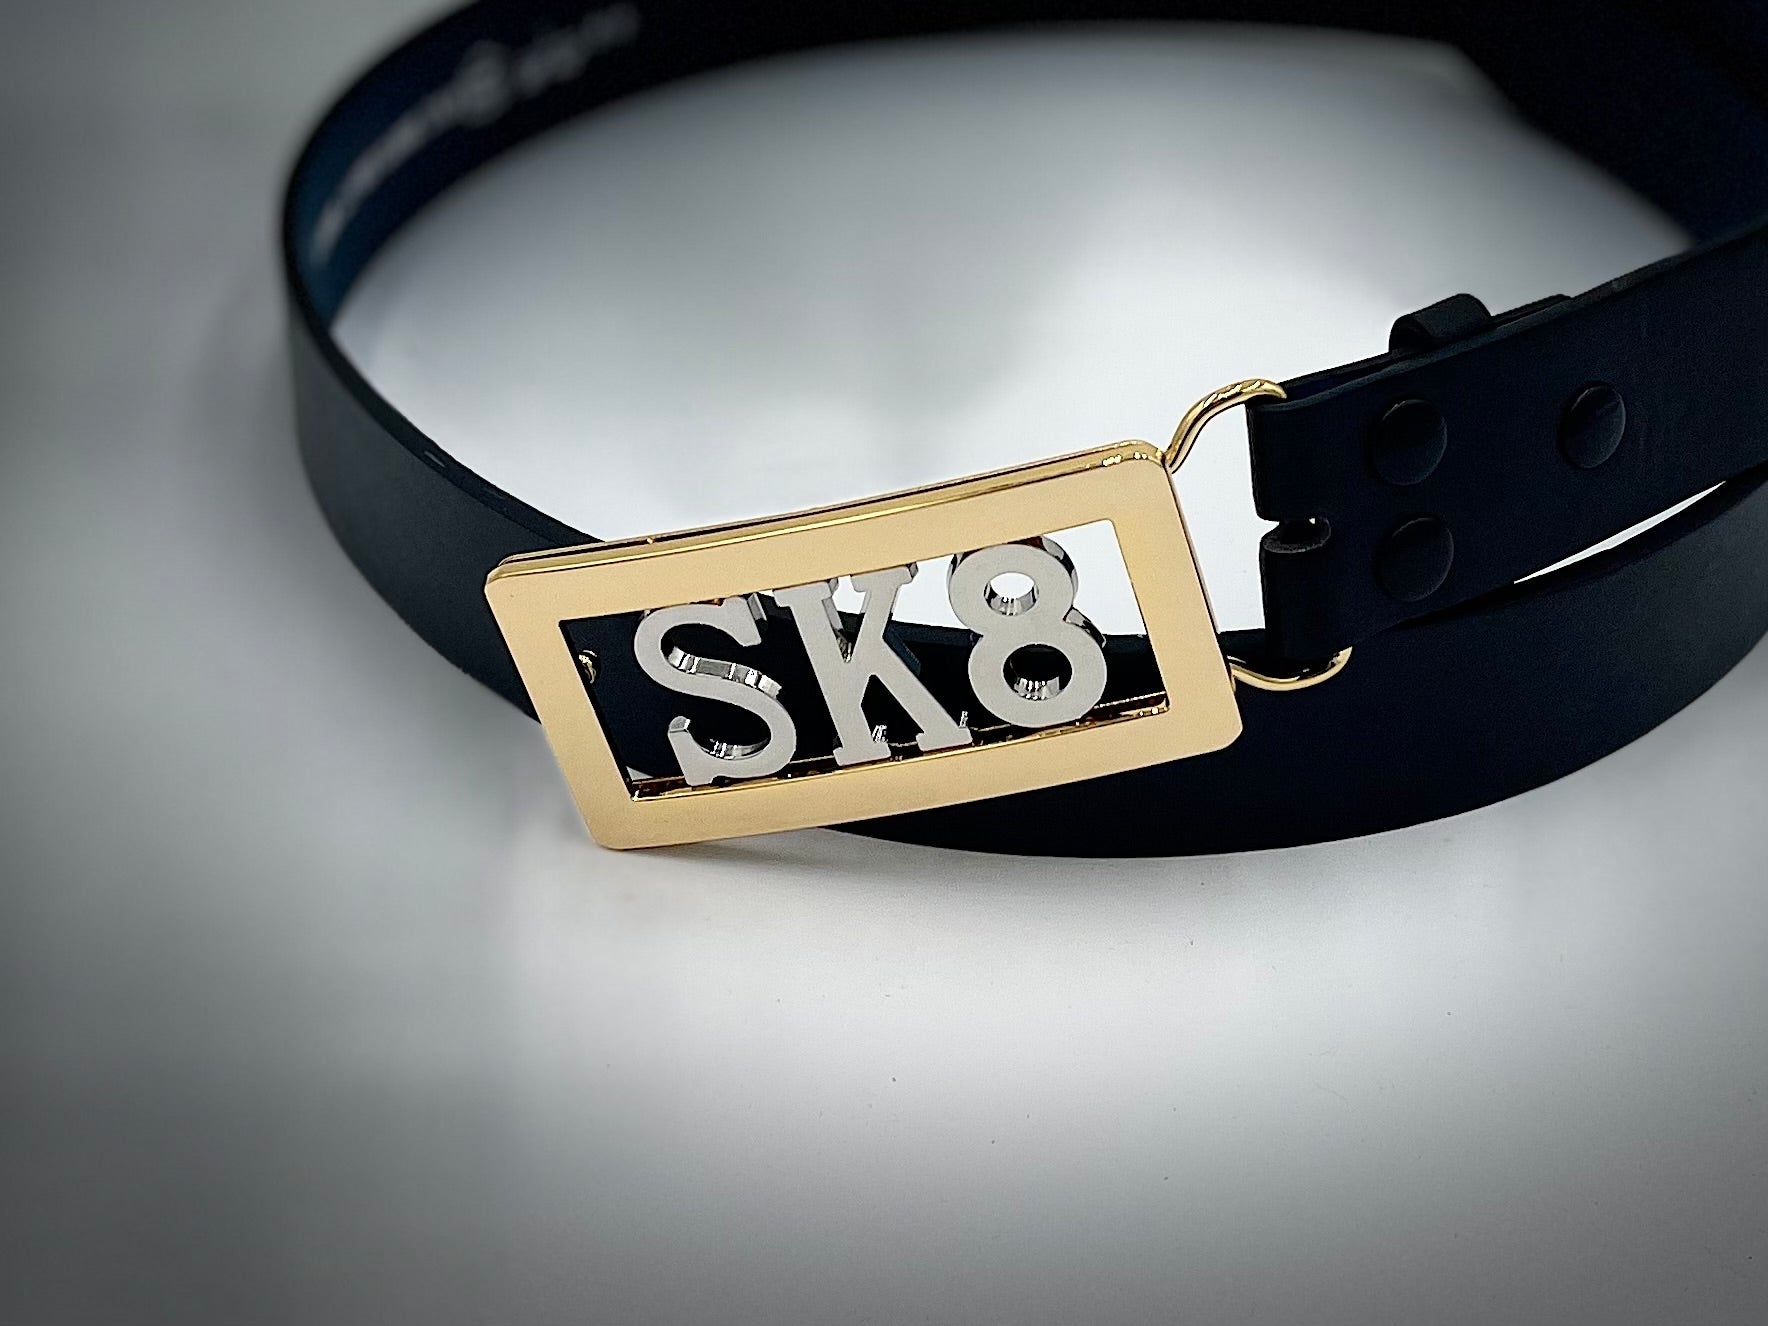 SK8 custom belt buckle gold frame silver letters with free belt